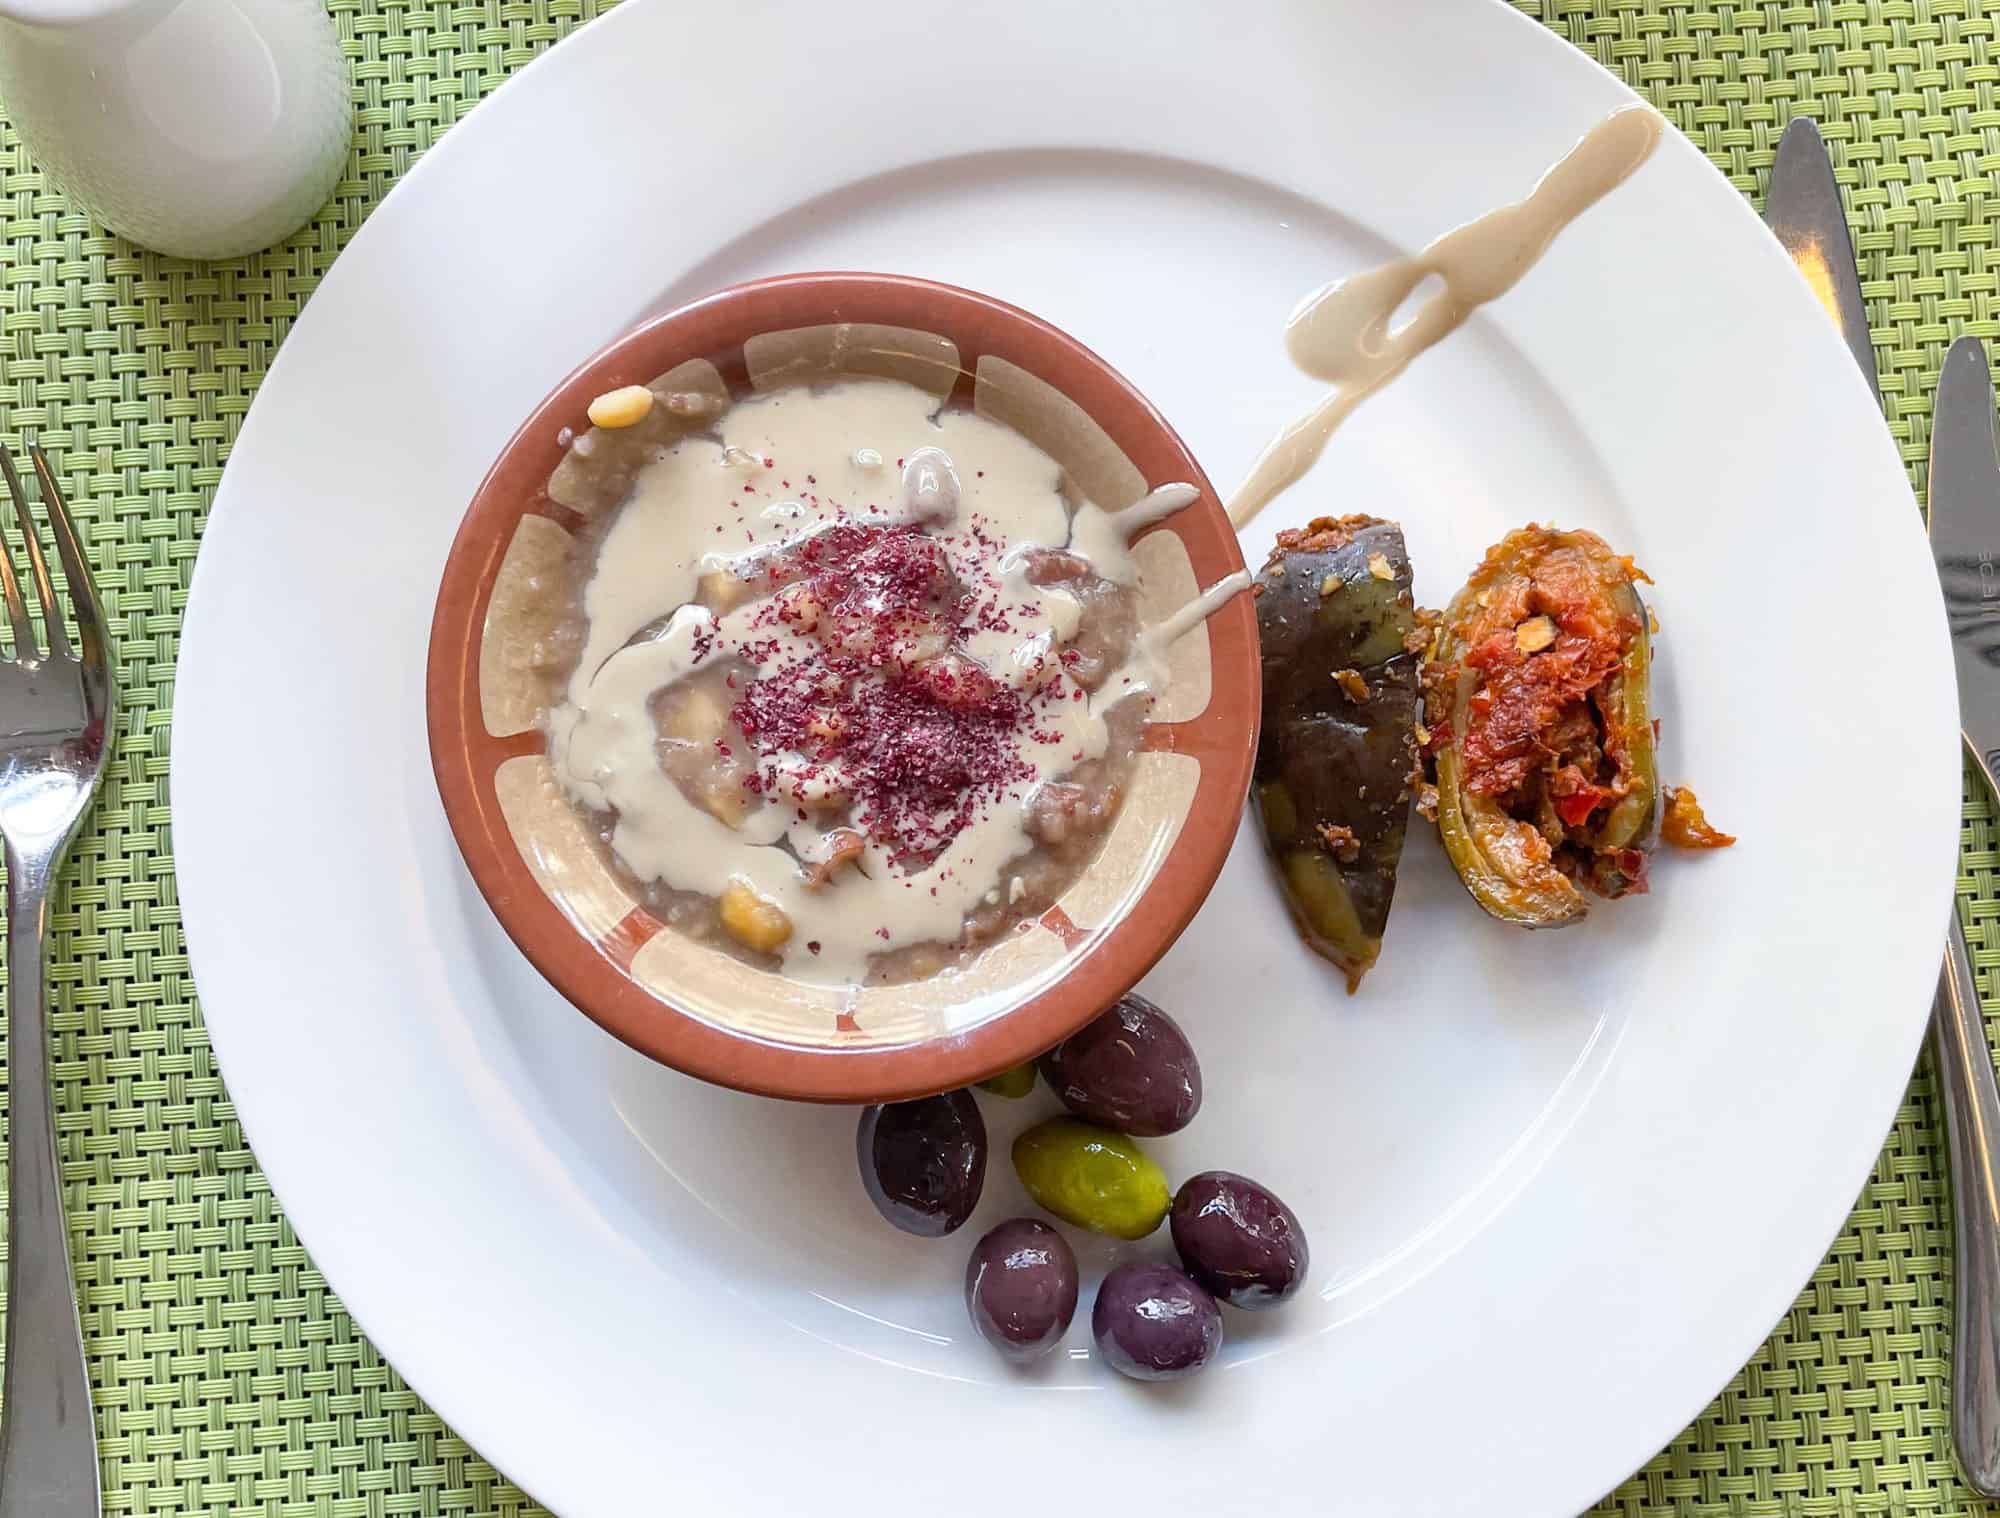 Jordanian food - foul mudummas and olives for breakfast